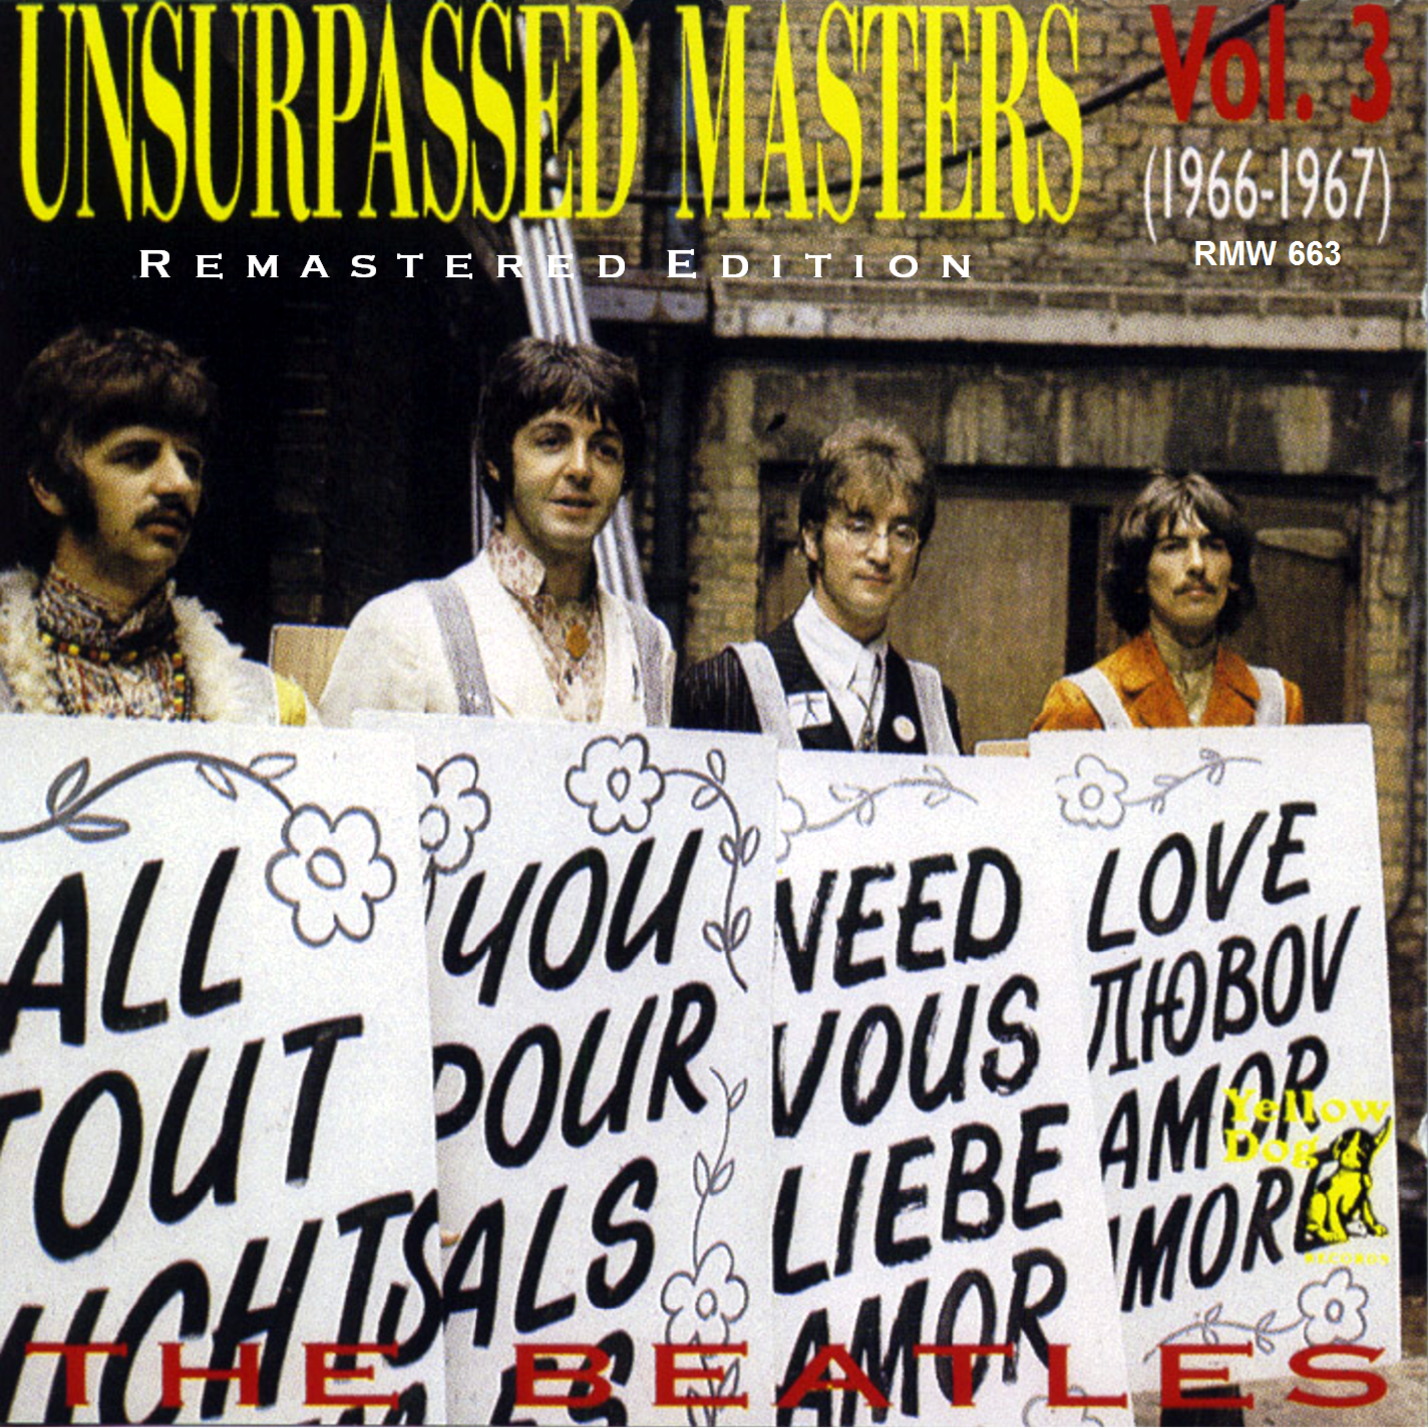 Beatles196xUnsurpassedMastersVol3 (2).png